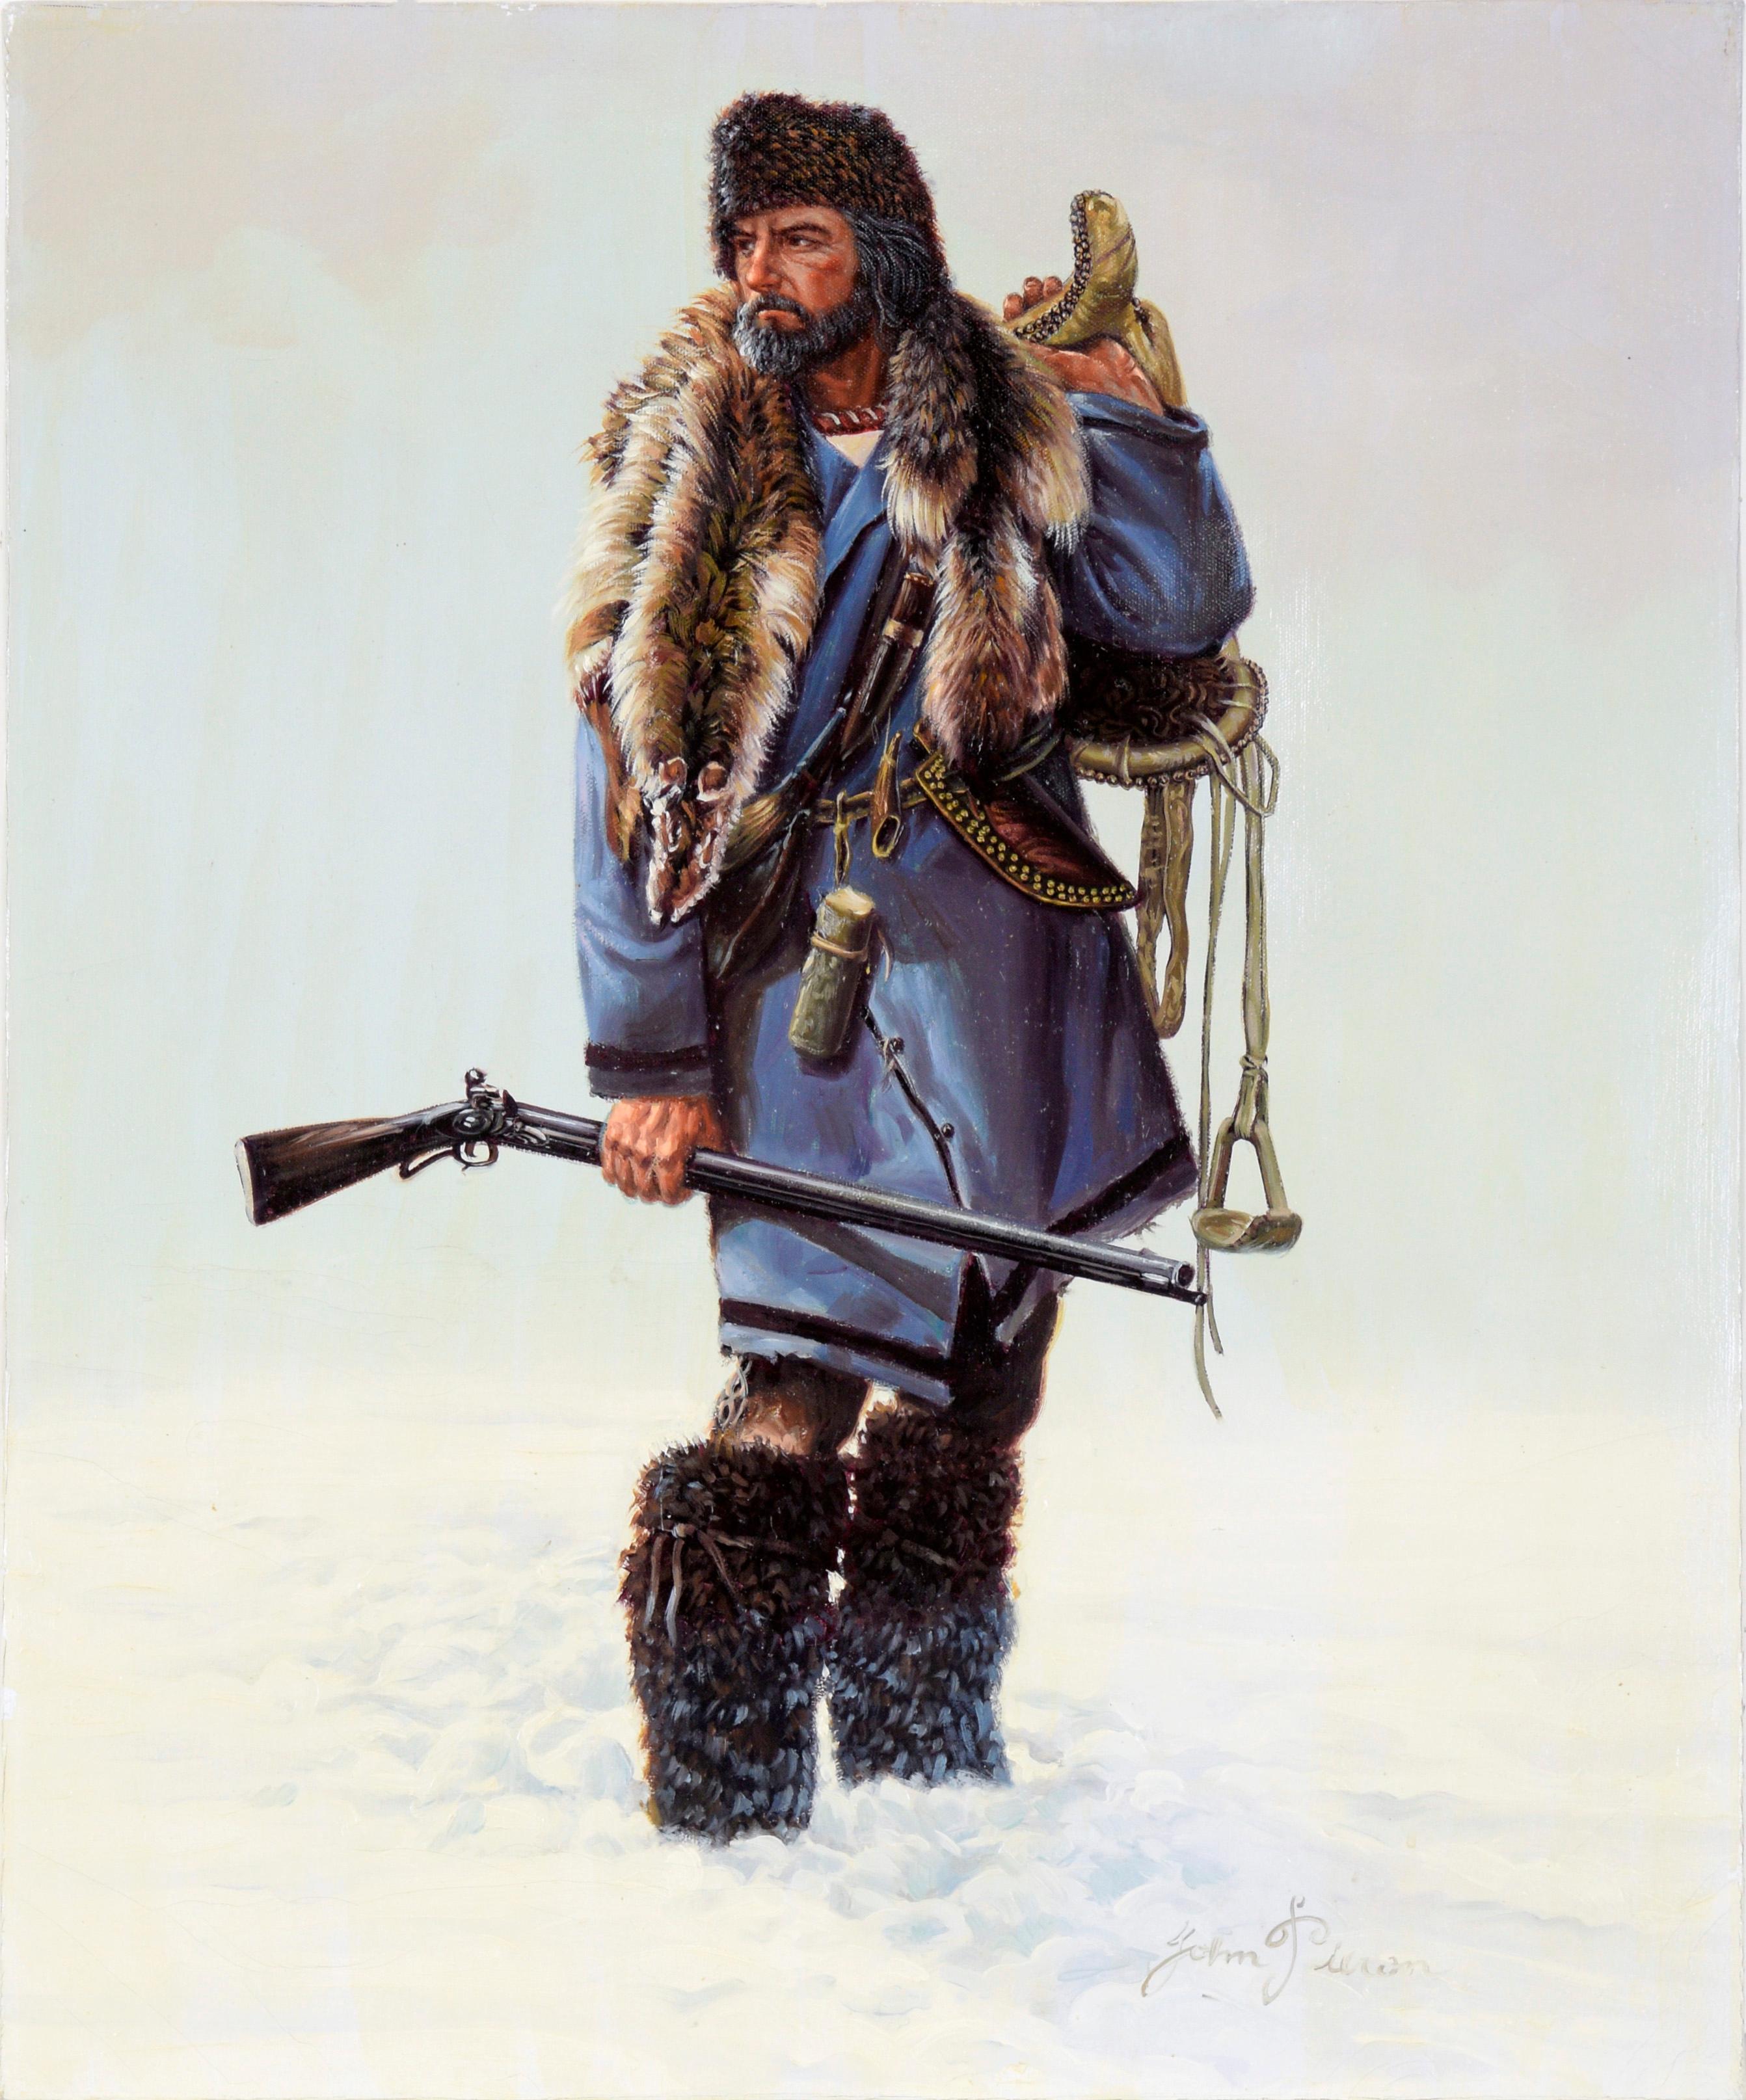 Fur Trapper in Winter - Portrait in Oil on Canvas